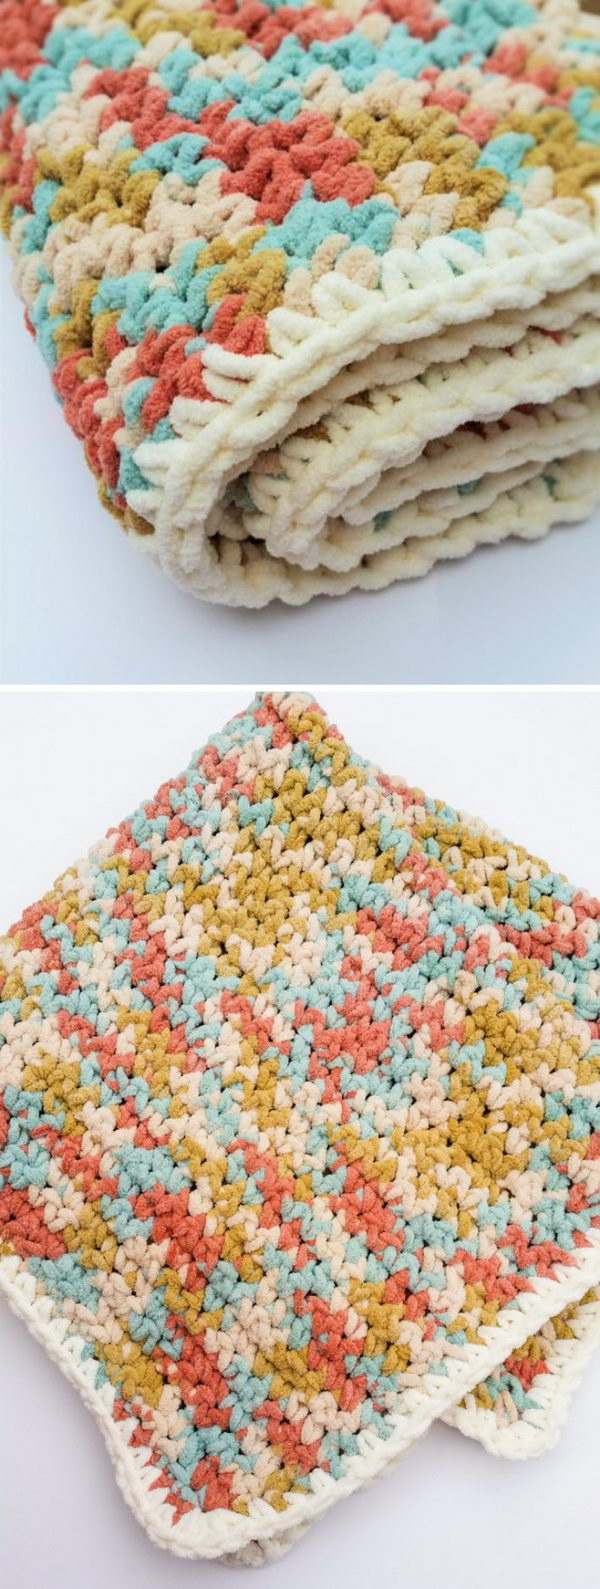 Baby Crochet Blanket Patterns 30 Free Crochet Patterns For Blankets Hative